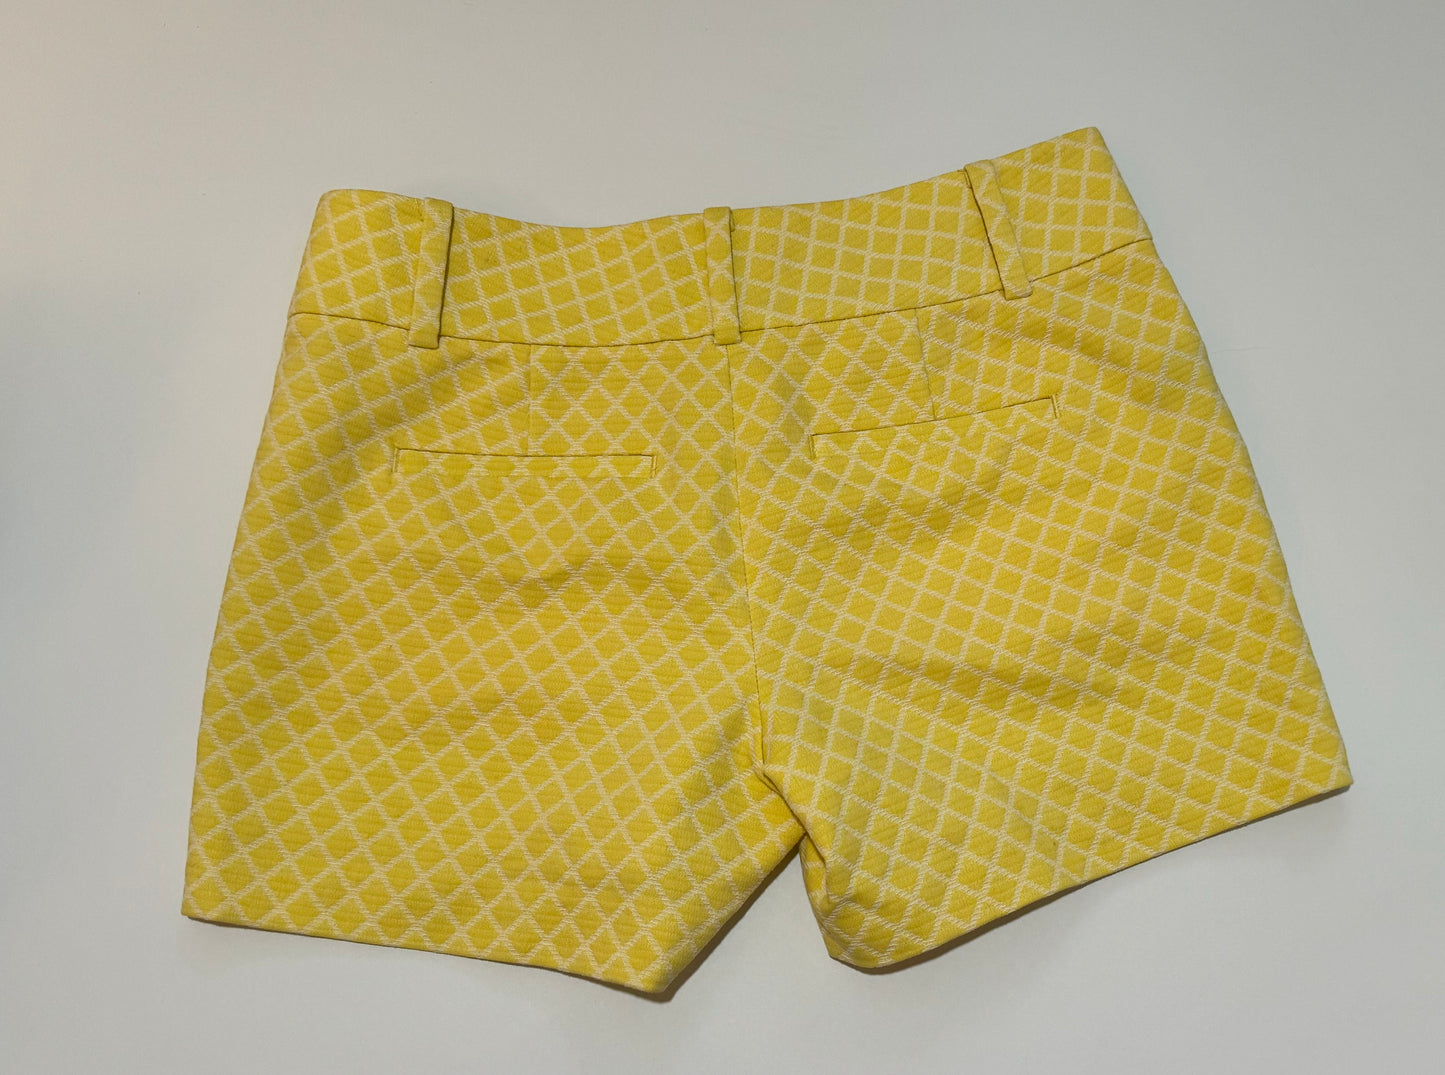 2 Women’s Ann Taylor Loft Yellow Shorts